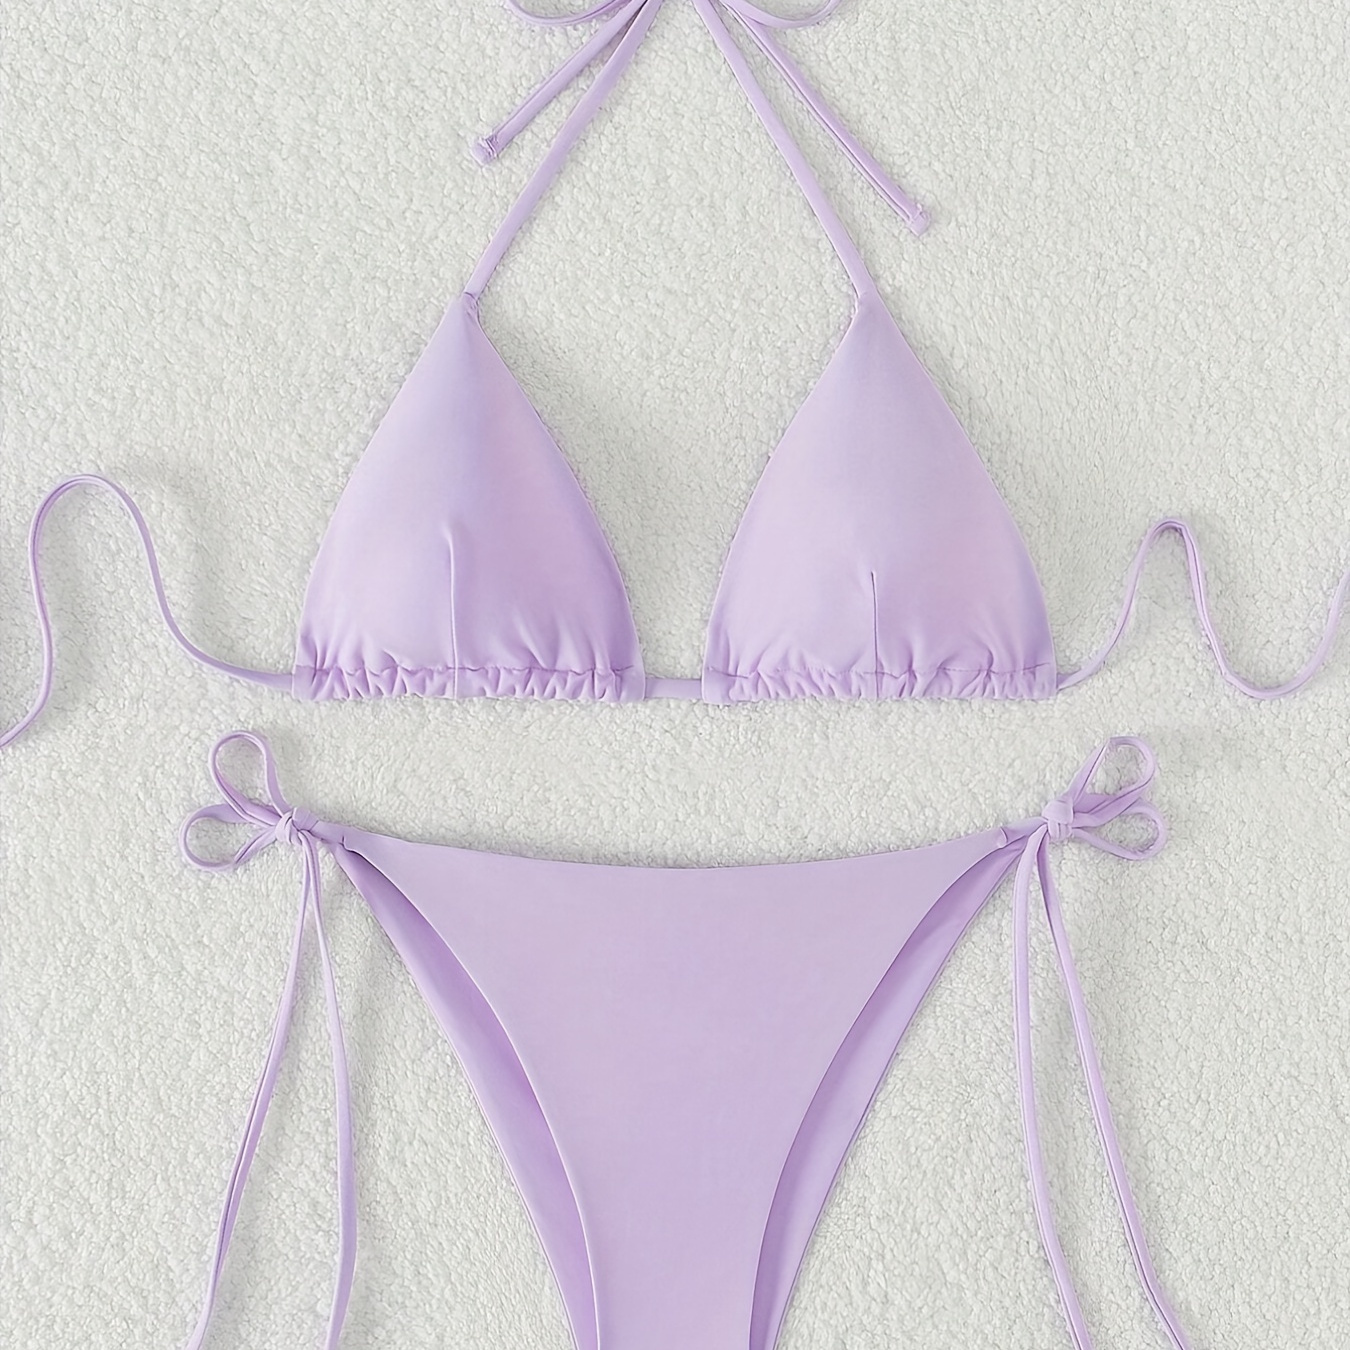 

Women's 2 Piece Bikini Set, Plain Purple Cinched Knotted Top & Bottoms, Swimwear, Beachwear, Poolside Outfit, Summer Fashion, Adjustable Ties, Comfort Fit